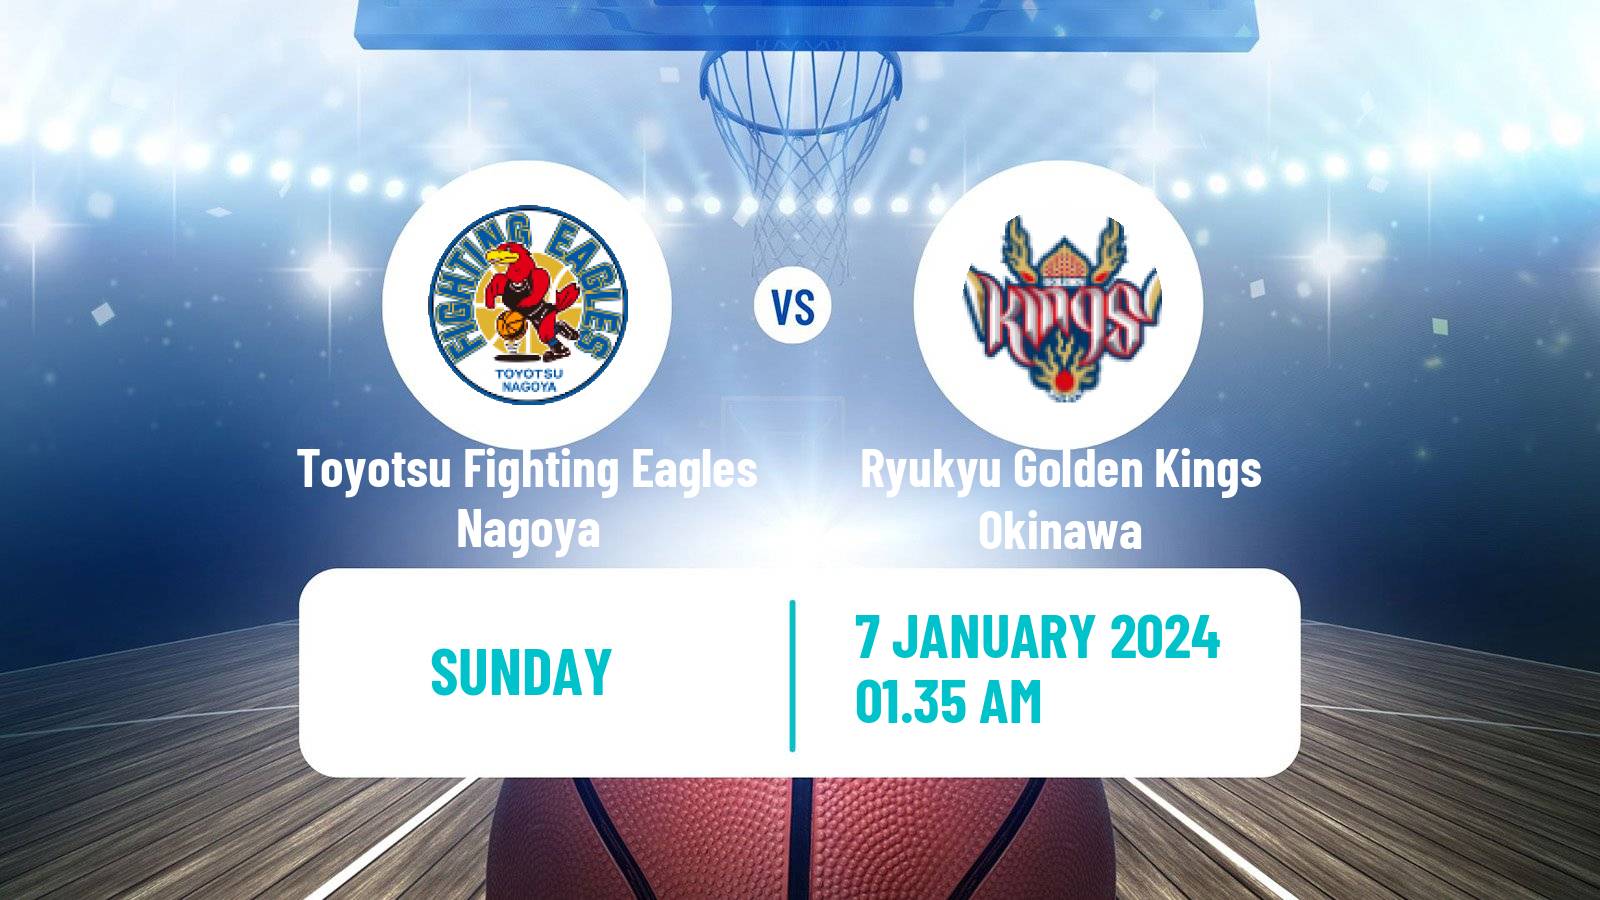 Basketball BJ League Toyotsu Fighting Eagles Nagoya - Ryukyu Golden Kings Okinawa